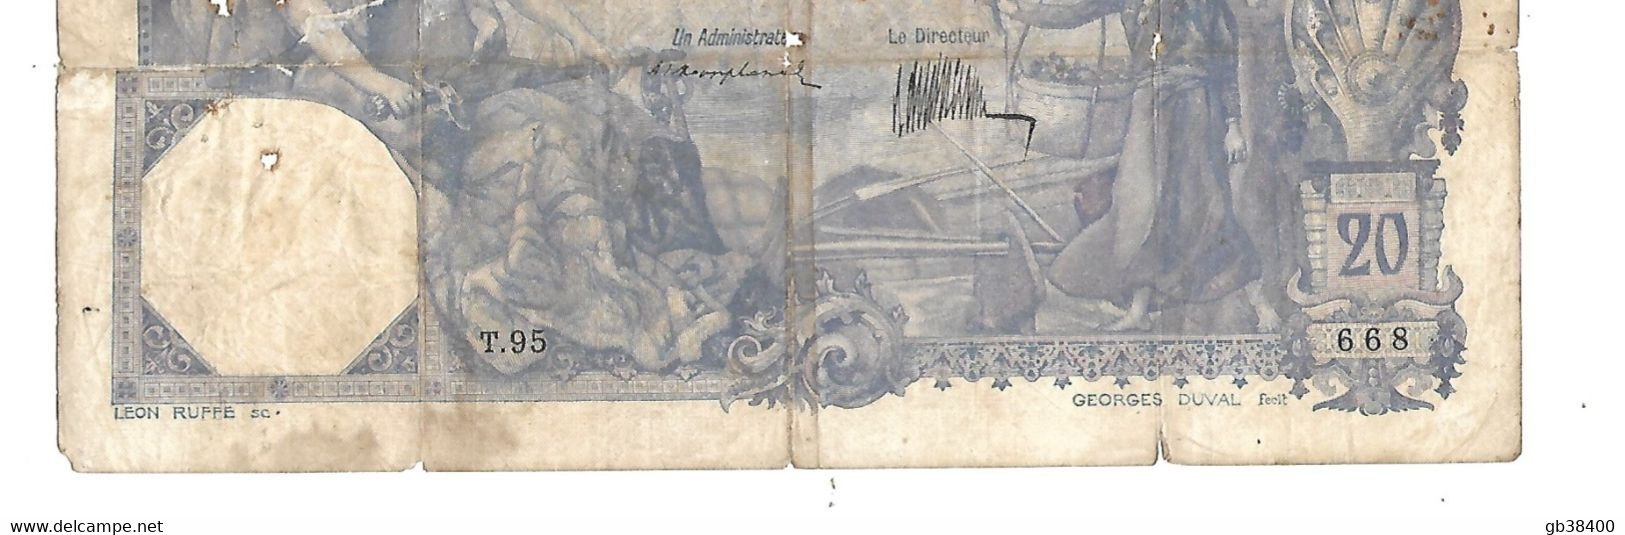 INDOCHINE BILLET DE 20 PIASTRES DE 1920    OCCASION - Indochine